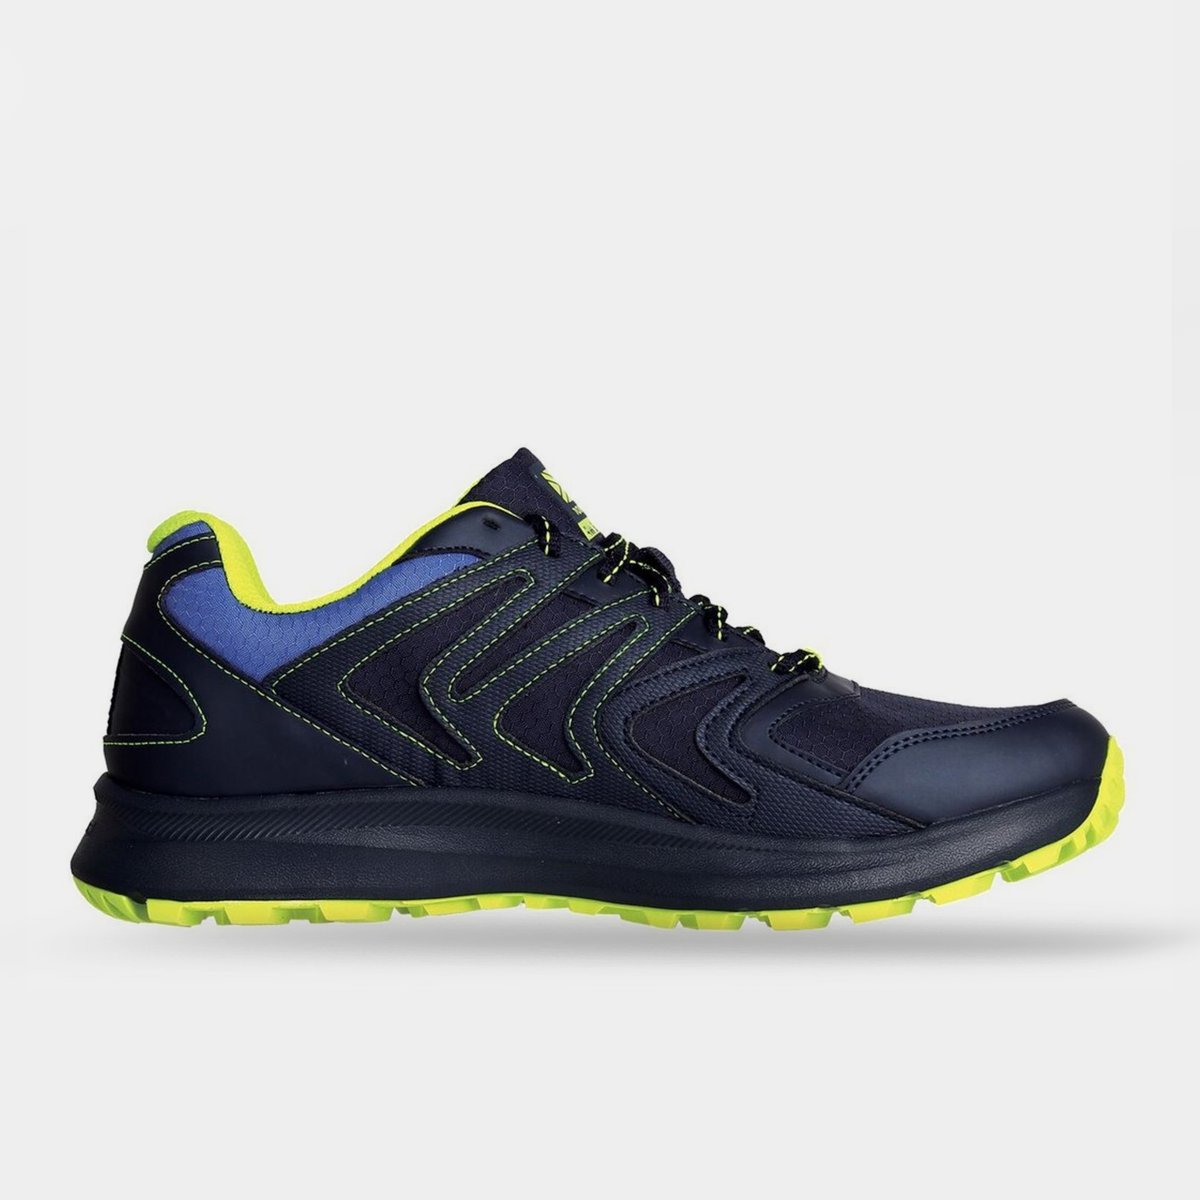 Karrimor Mens Caracal Waterproof Trail Running Shoes Trainers | eBay